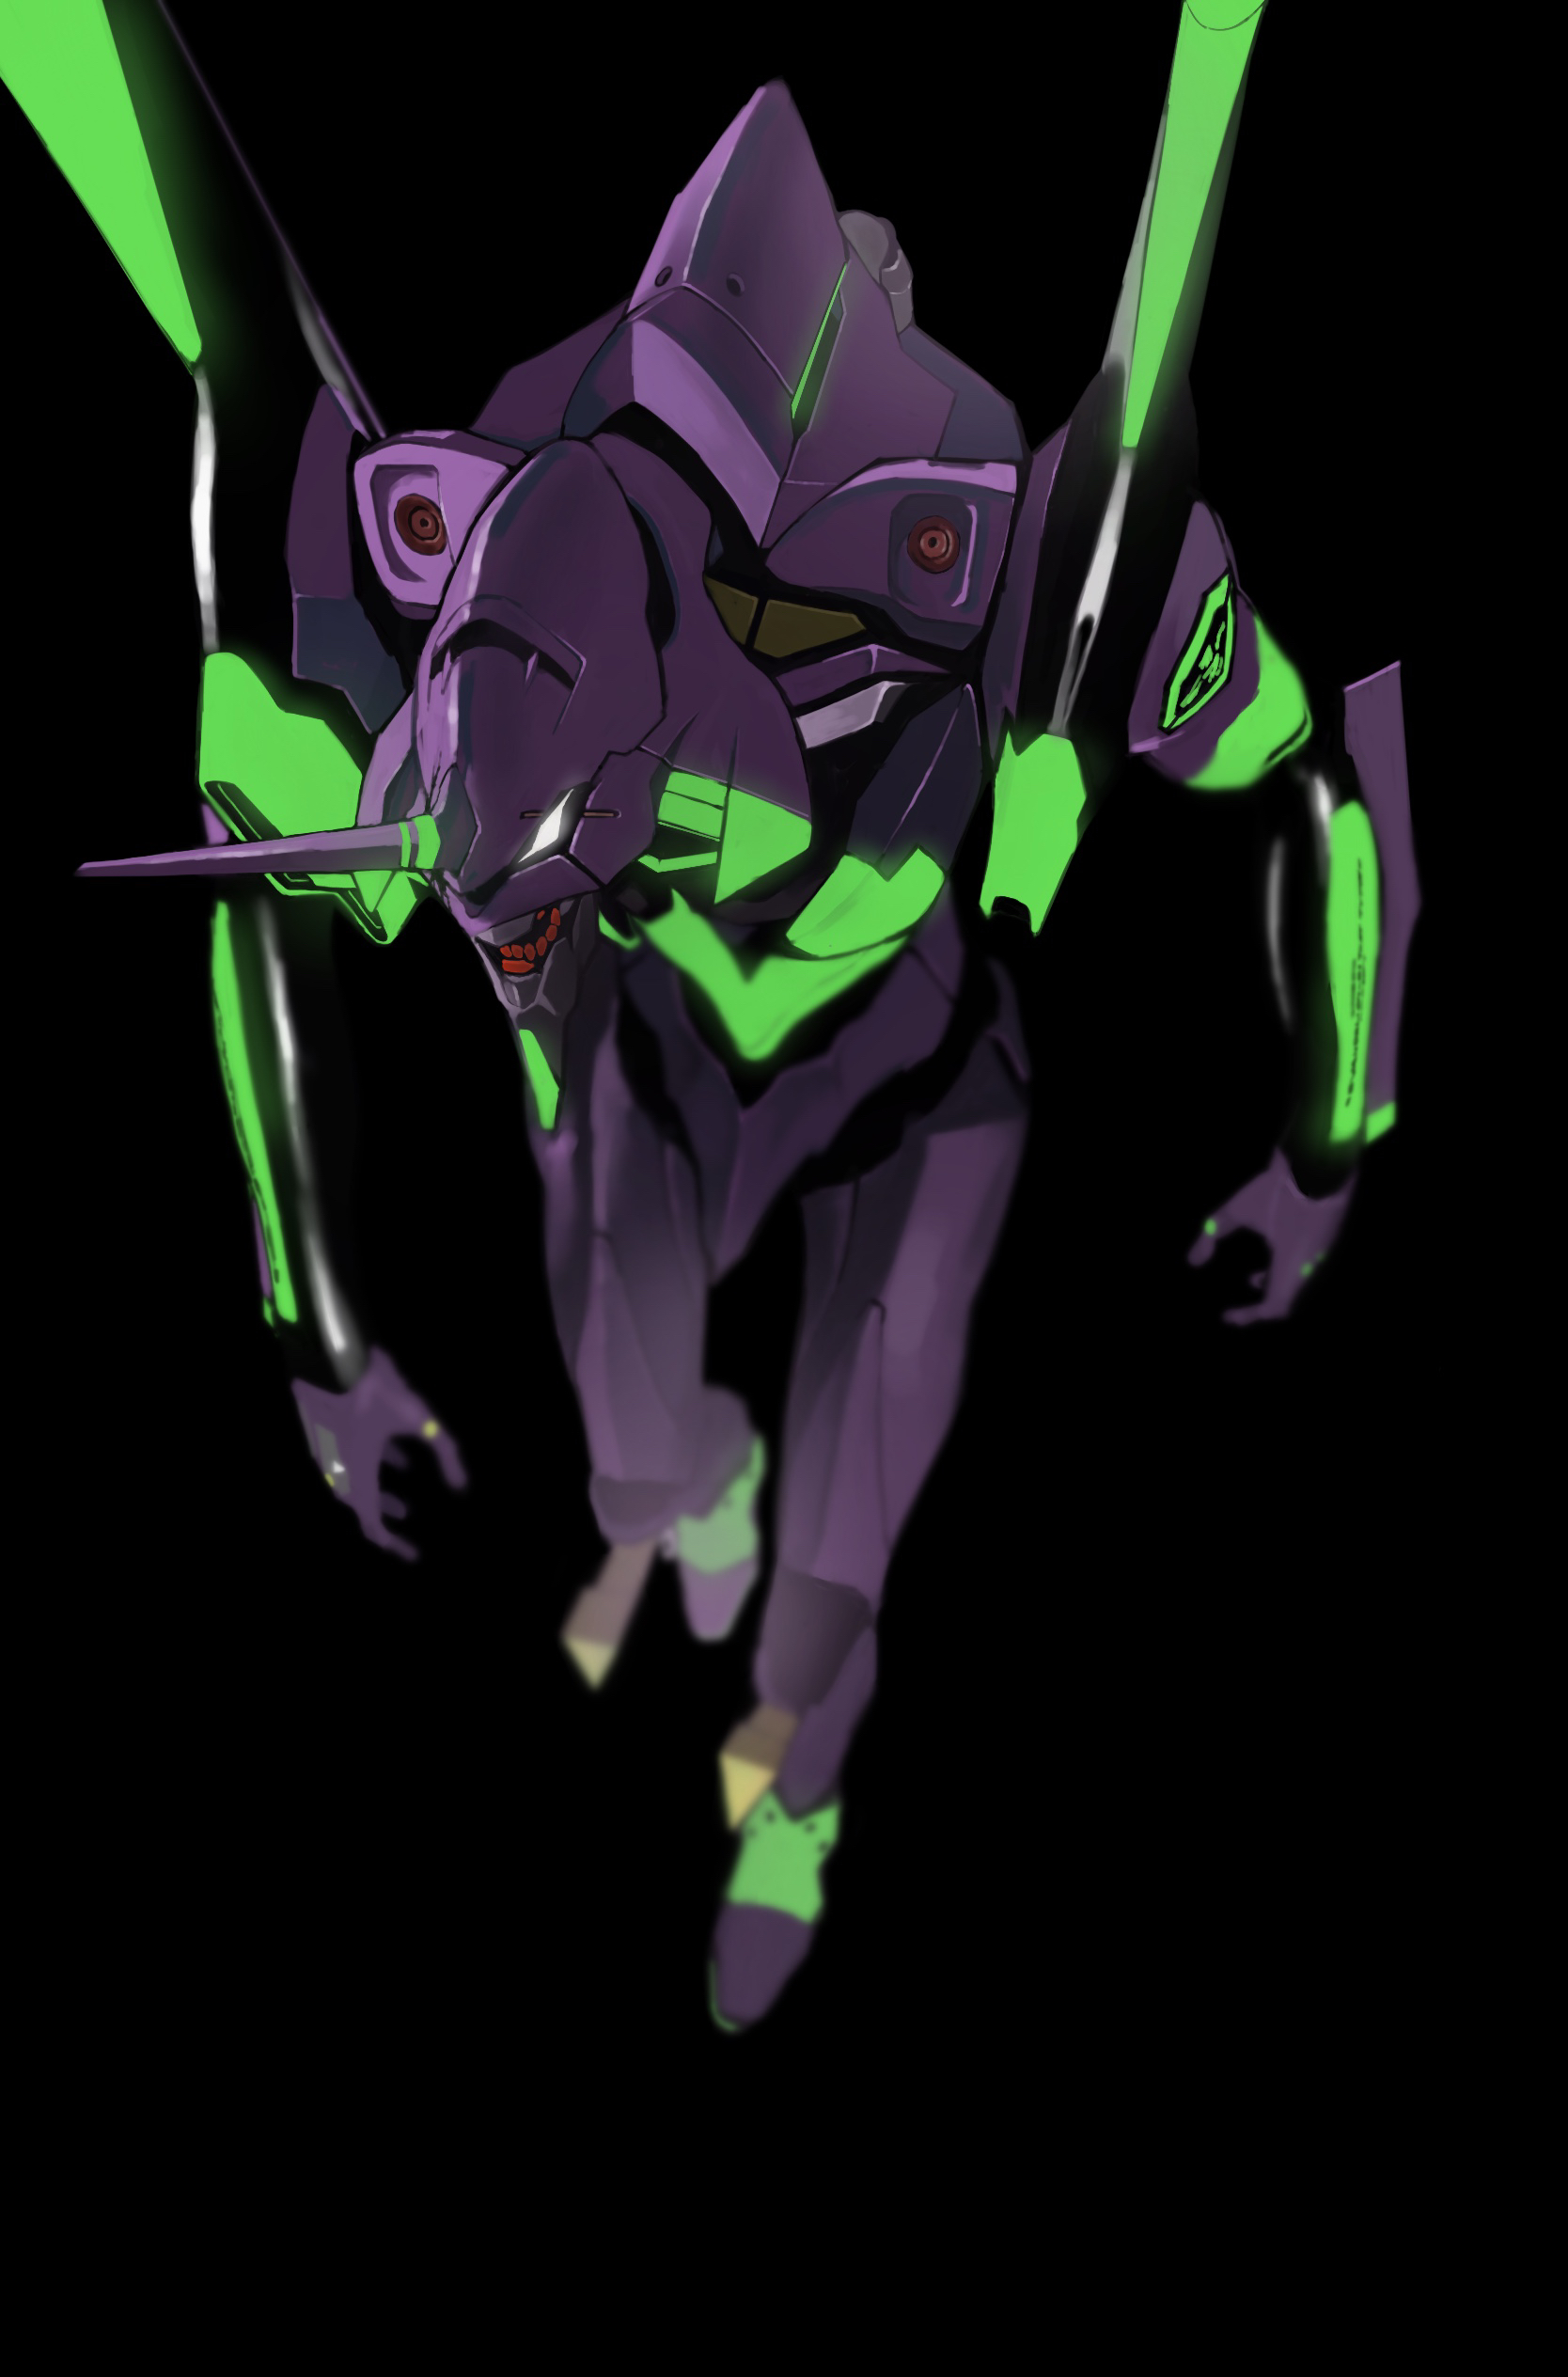 EVA Unit 01 Neon Genesis Evangelion Anime Mechs Super Robot Taisen Artwork Digital Art Fan Art Simpl 1668x2528